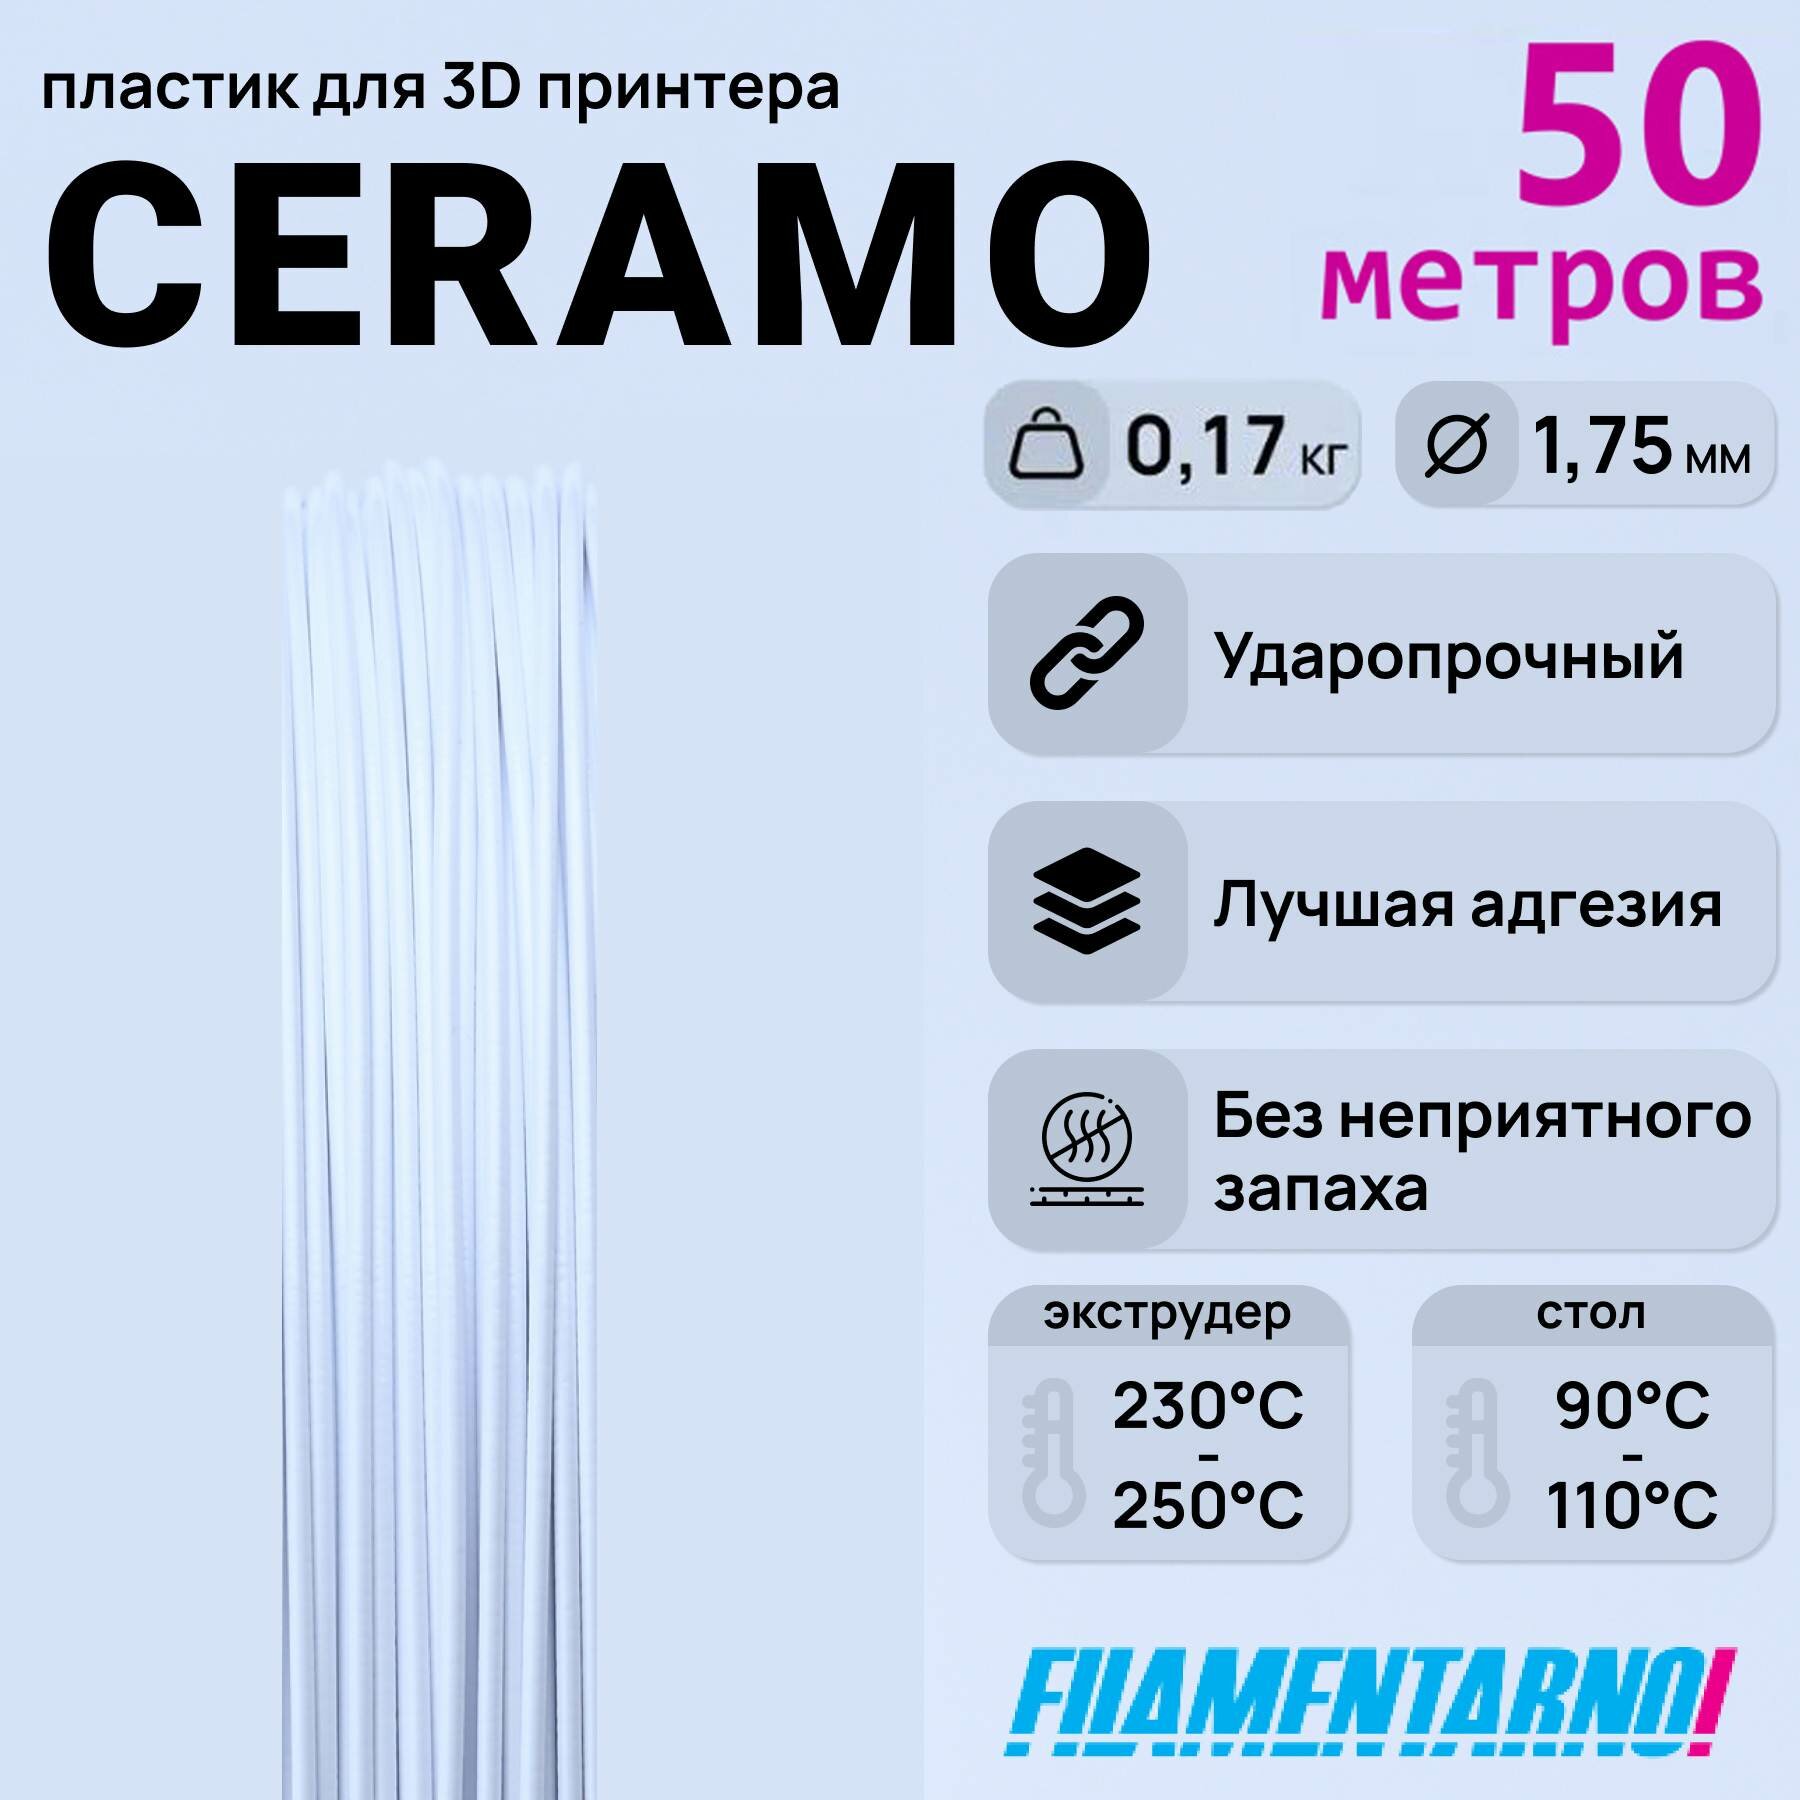 SAN Ceramo белый моток 50 м, 1,75 мм, пластик Filamentarno для 3D-принтера